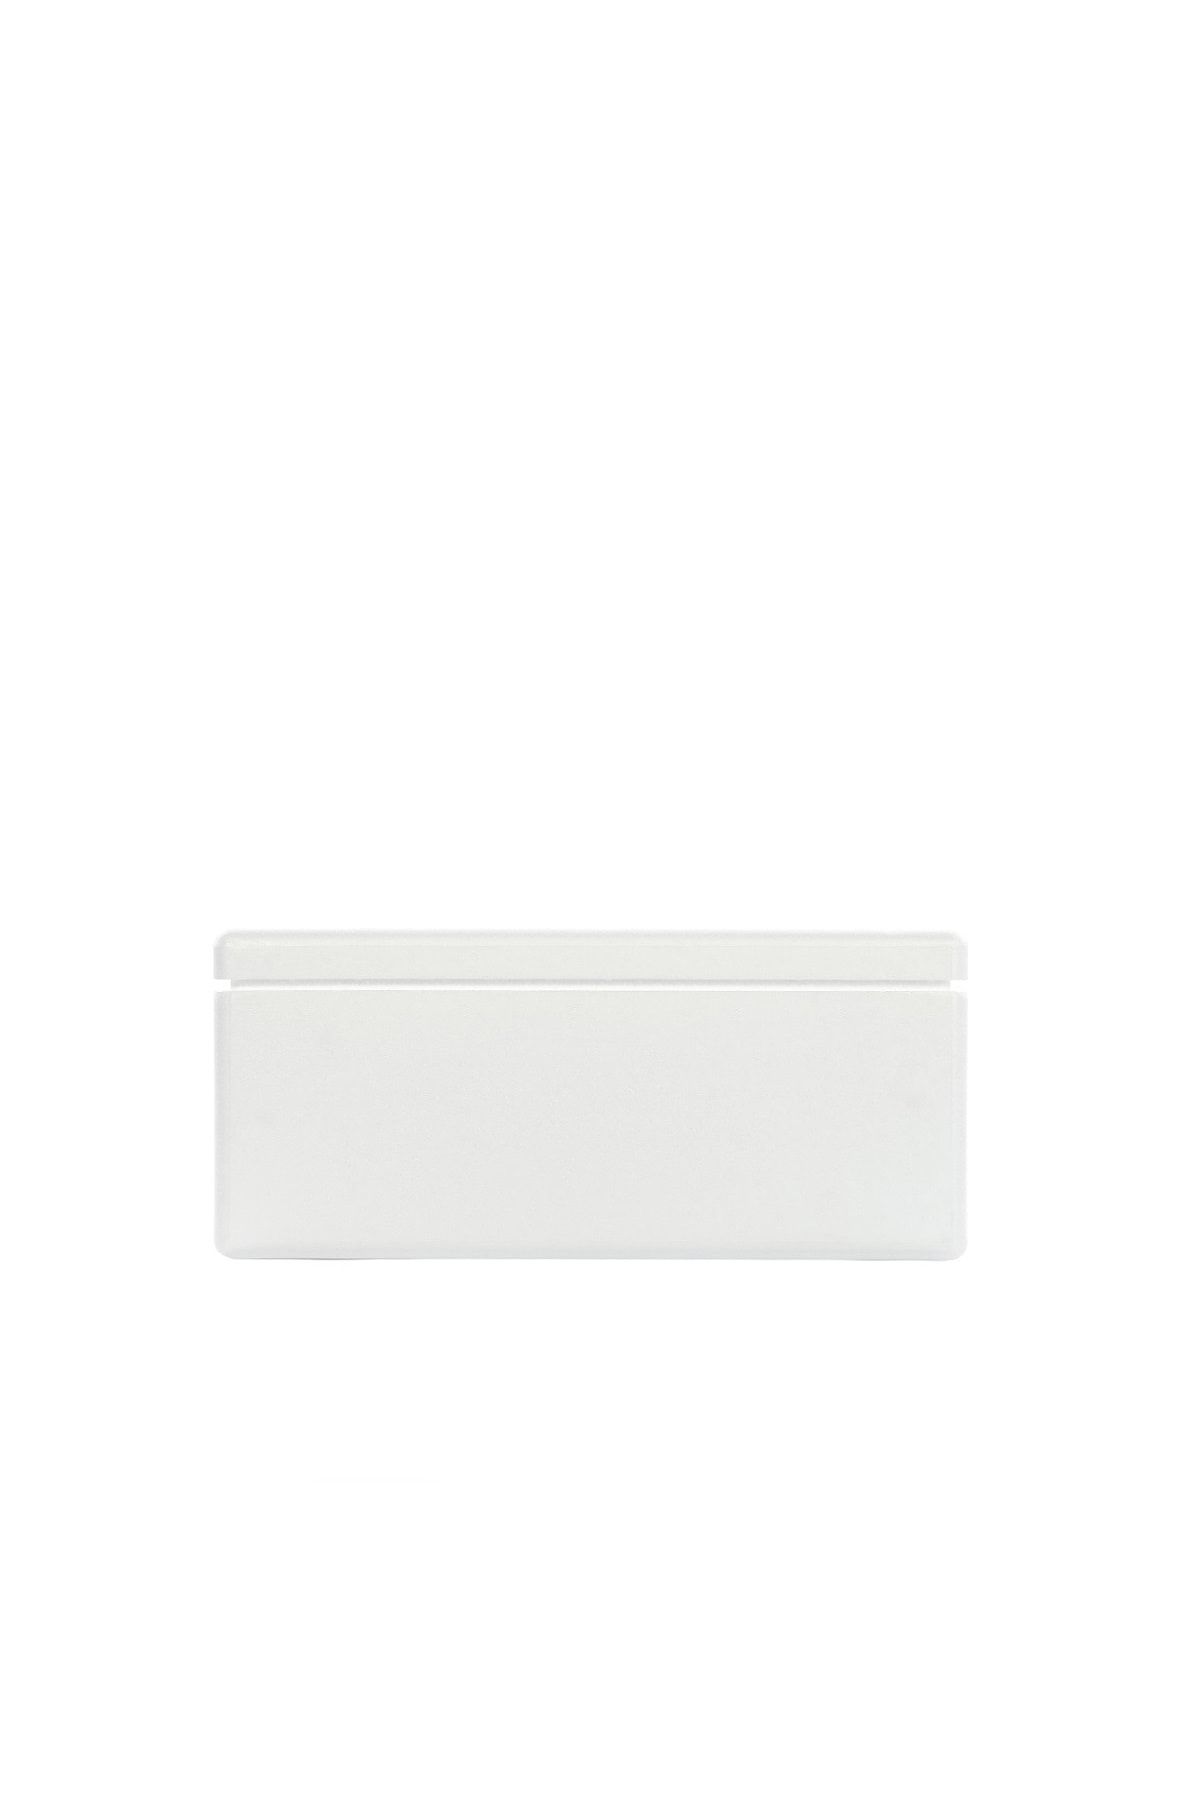 ViyolPazarı Beyaz Strafor Köpük Kutu (28,8x23x16,5) cm 2 kg - 8 Adet D-4